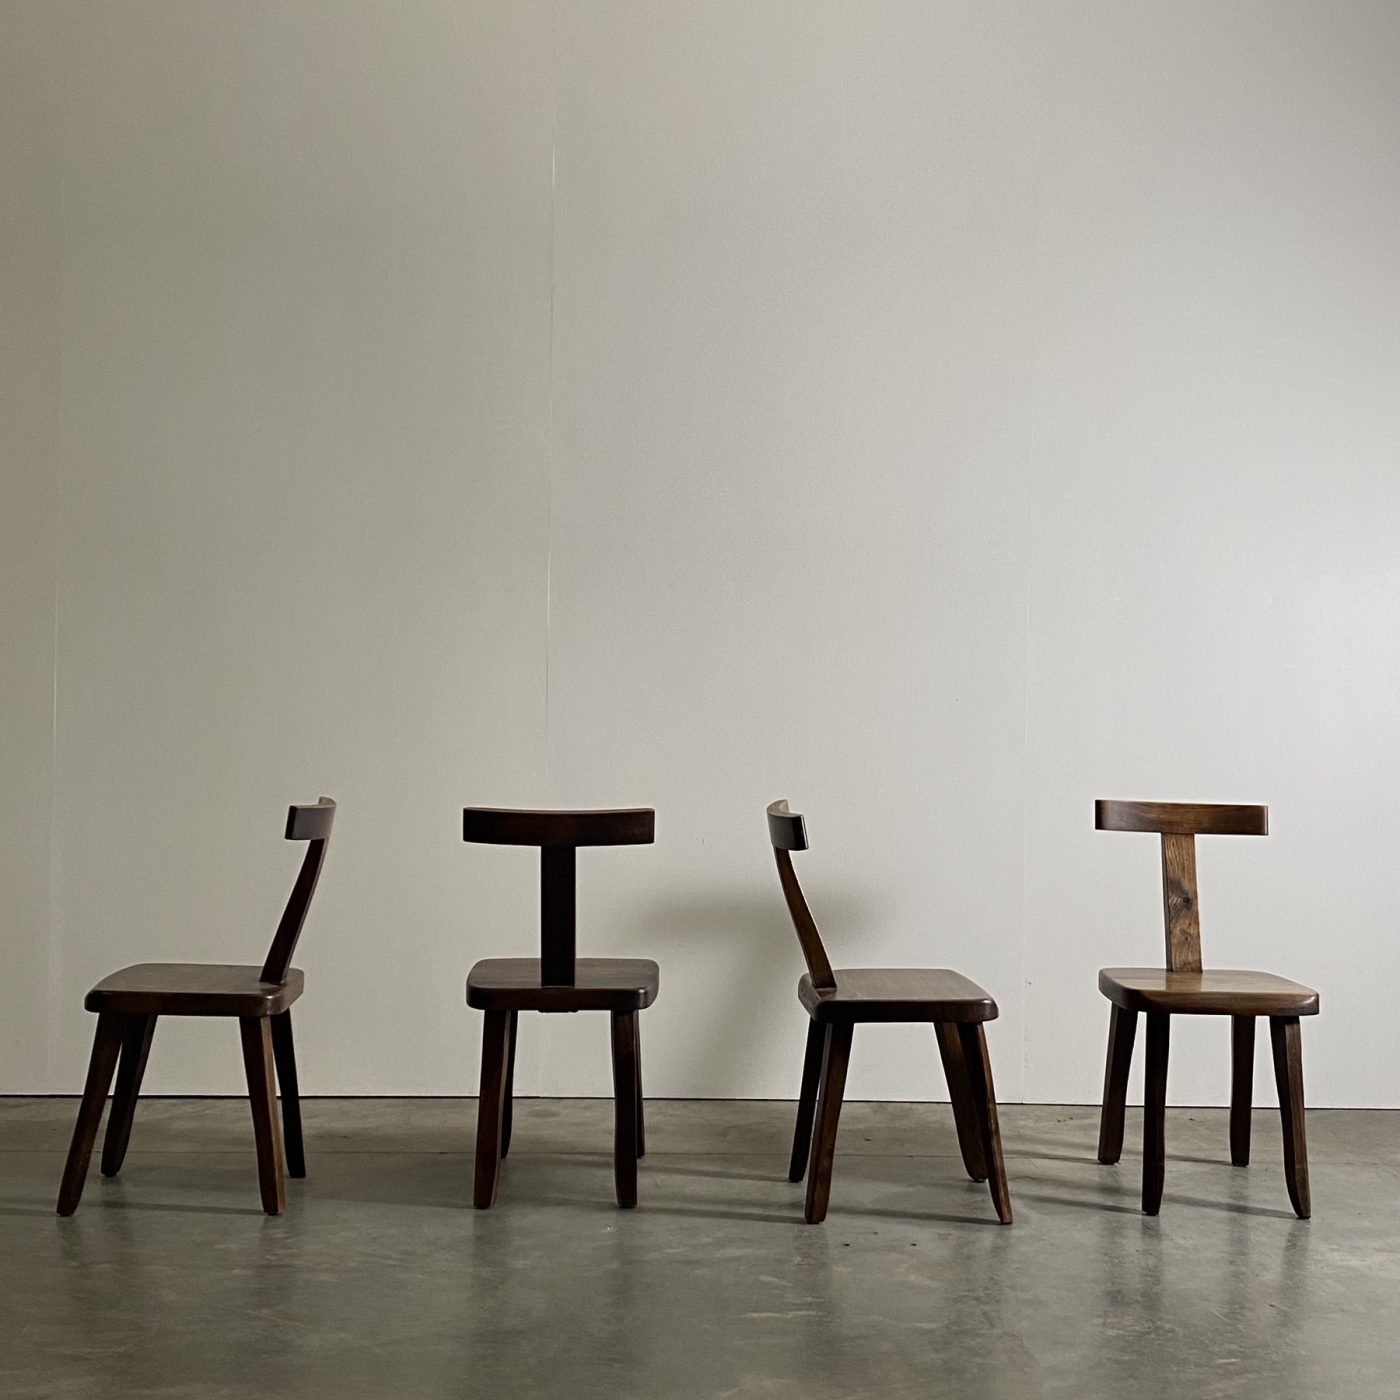 objet-vagabond-hanninen-chairs0006